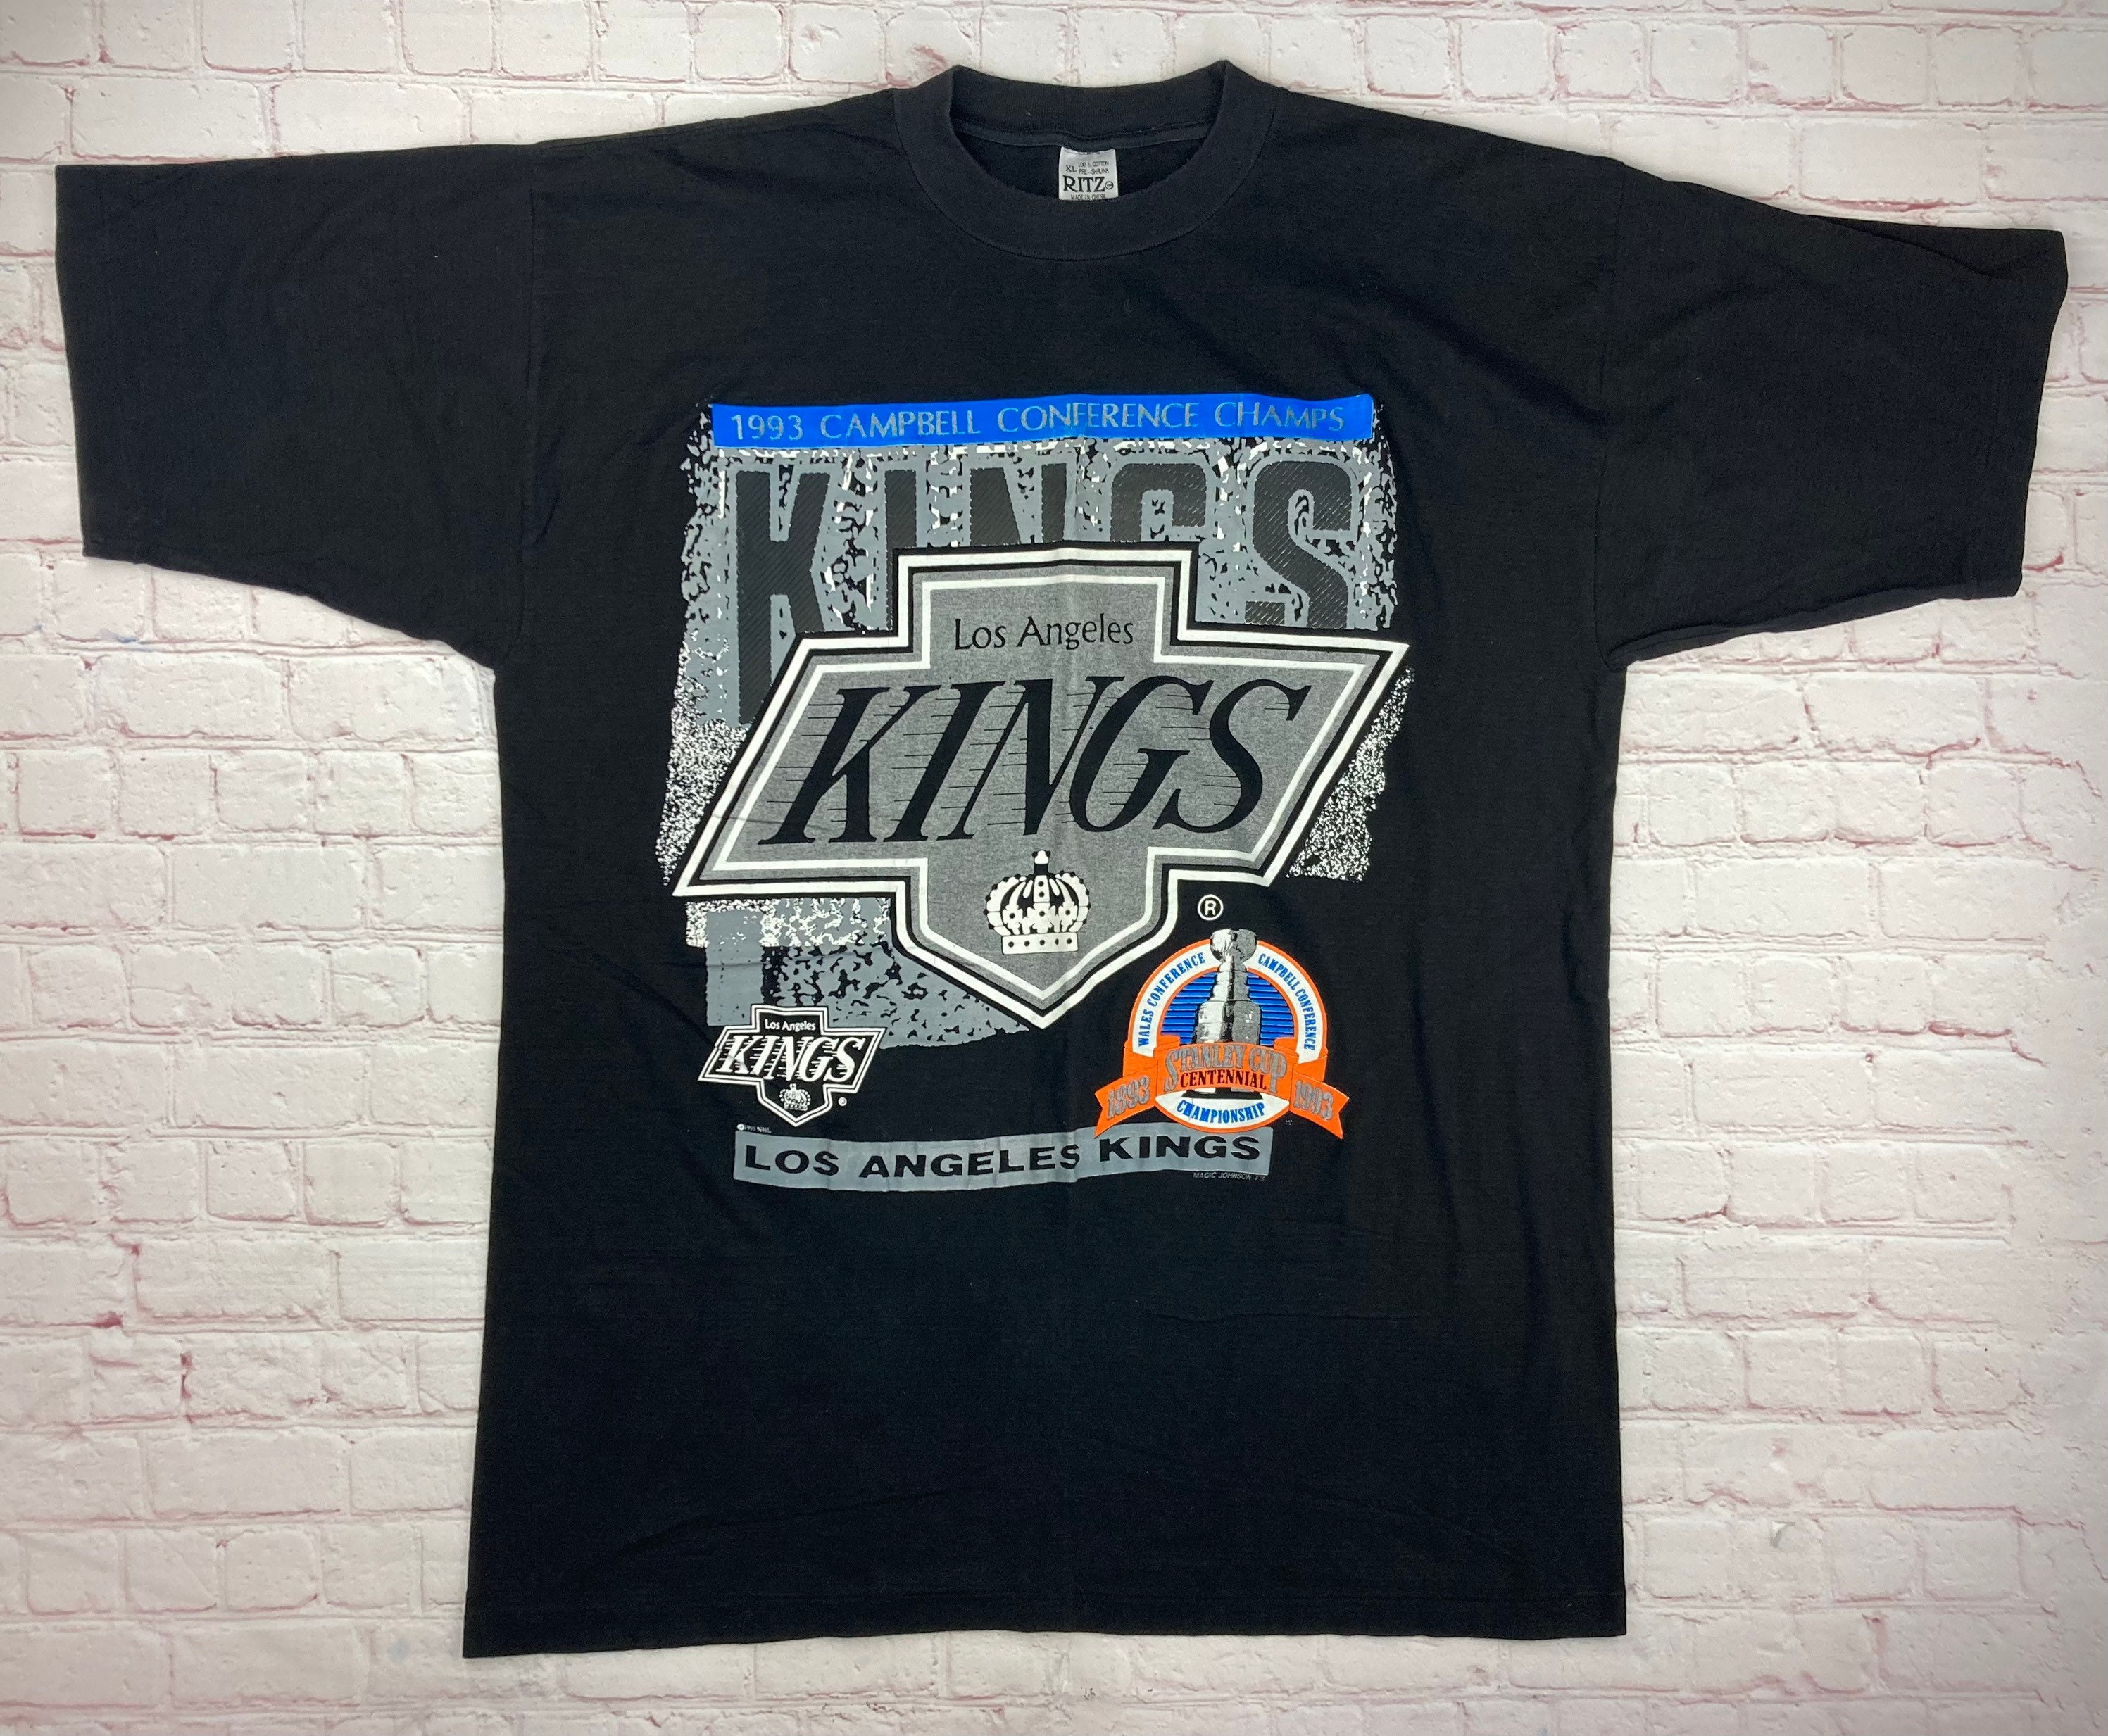 StrongIslandVTG Rare Vintage Original 1993 Los Angeles Kings T-Shirt by Magic Johnson T's.